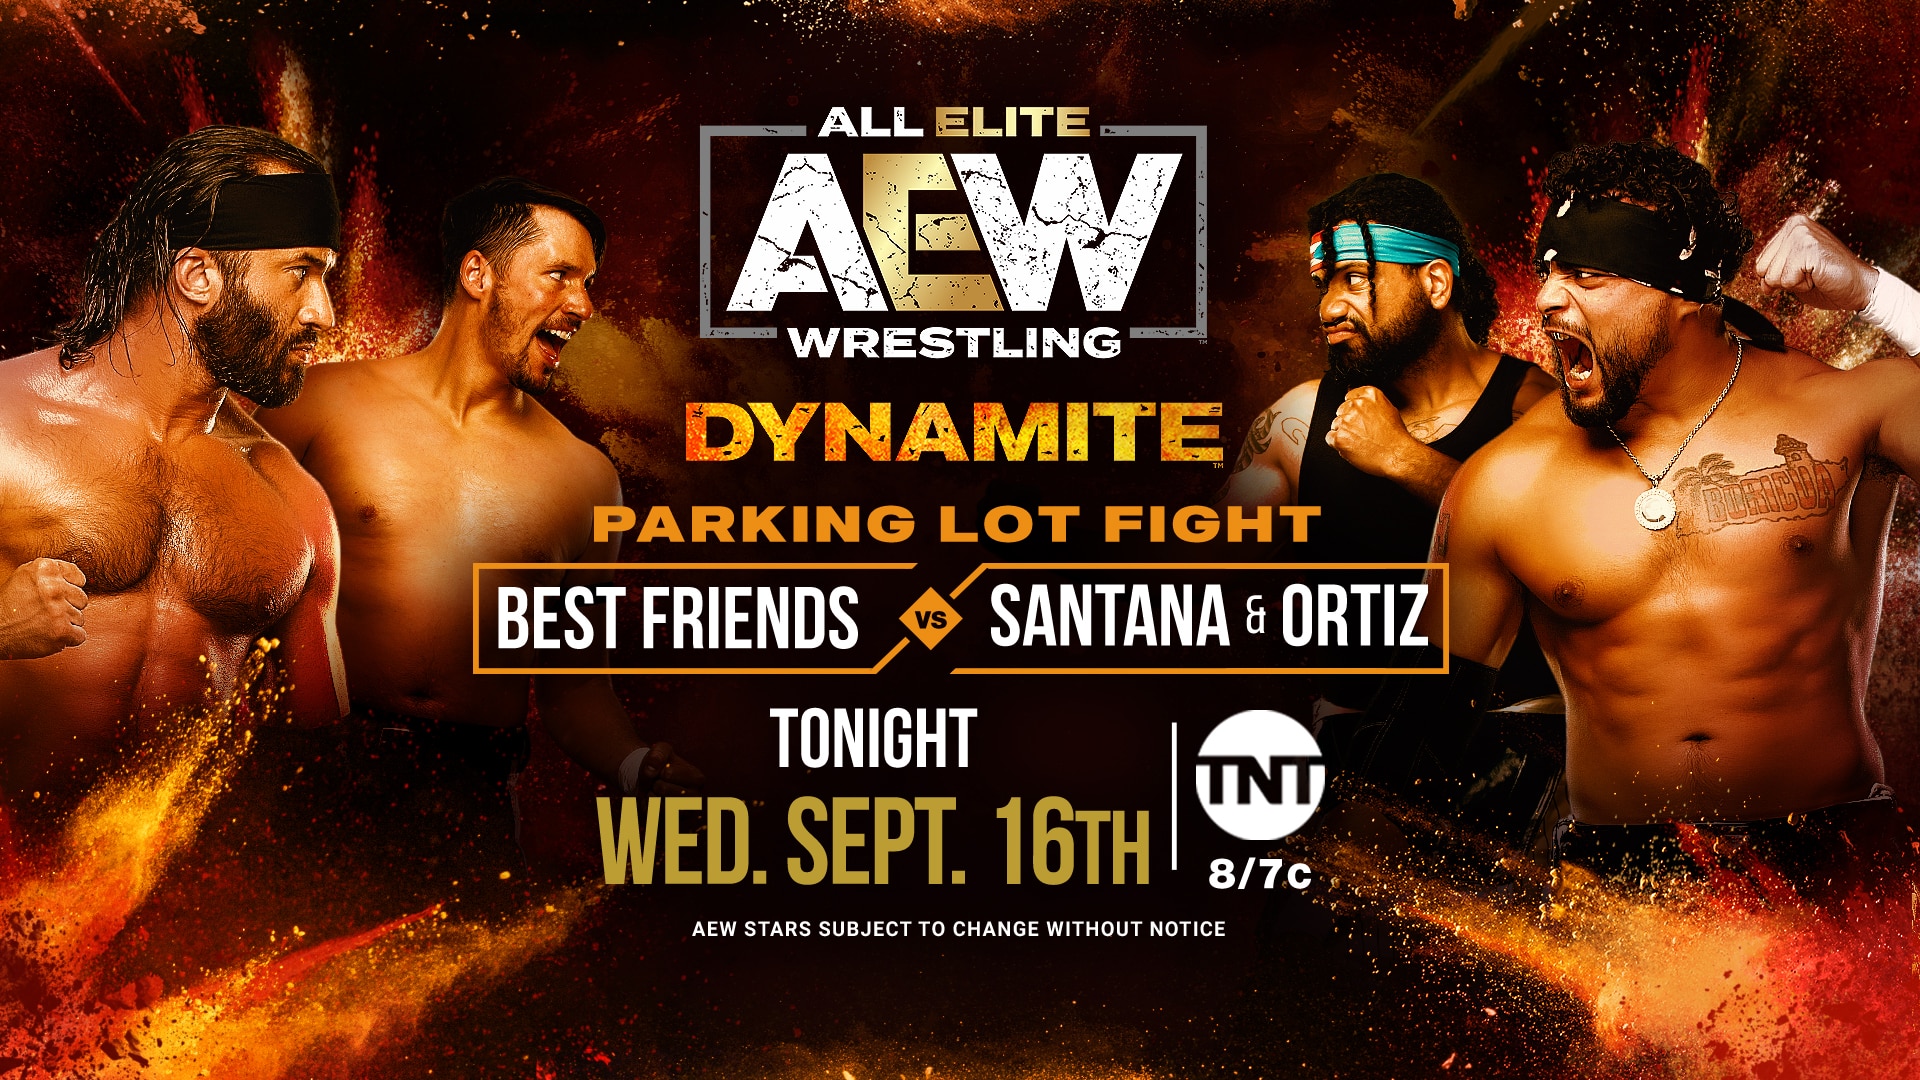 Santana & Ortiz vs Best Friends PARKING LOT FIGHT